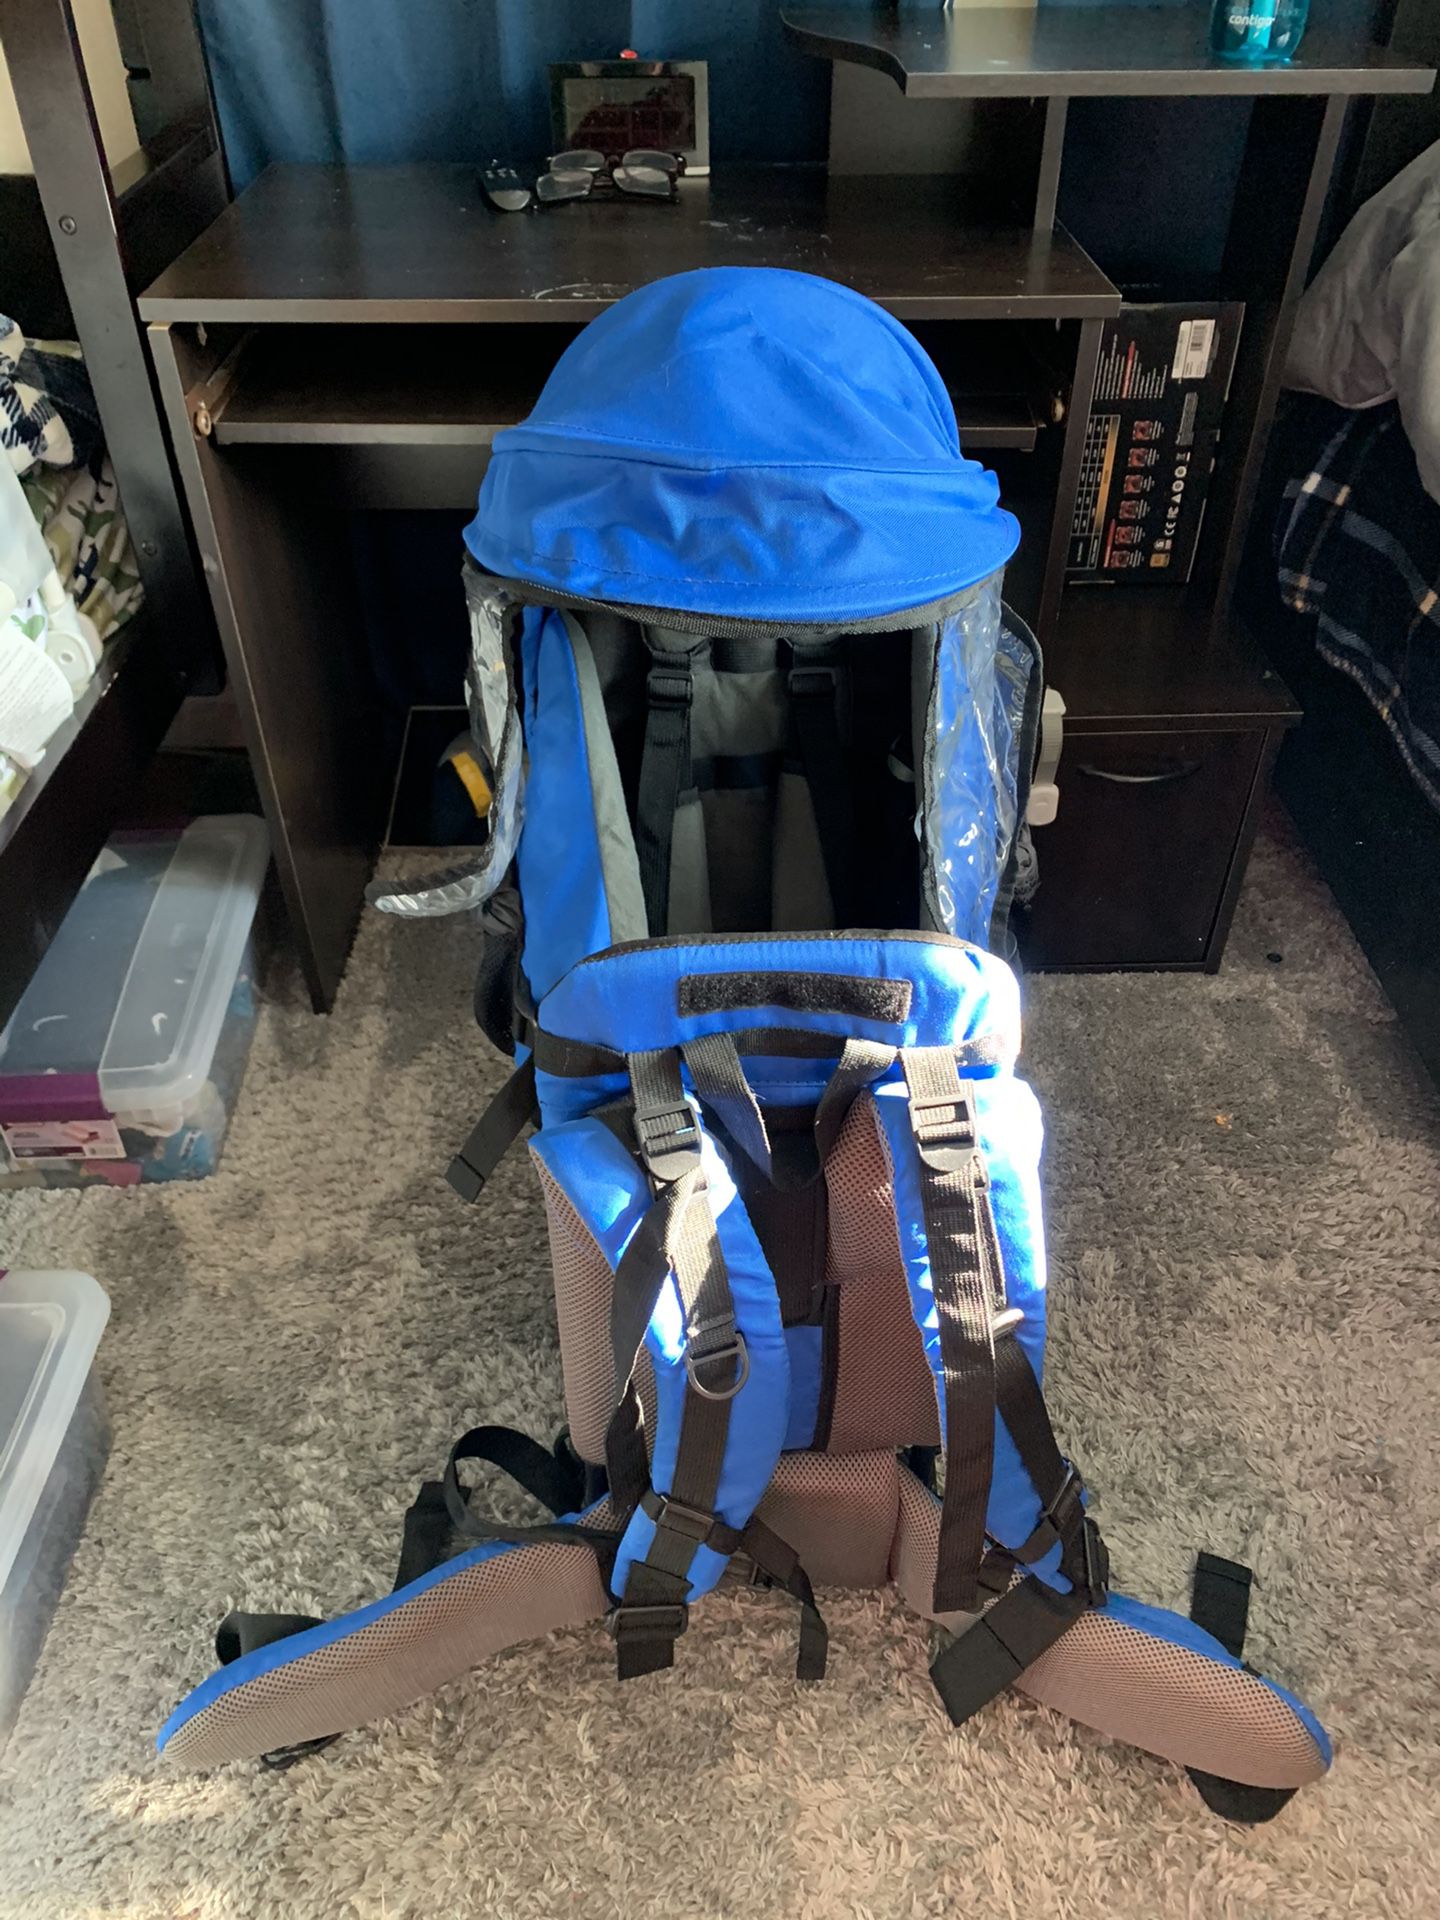 Hiking backpack / kid carrier